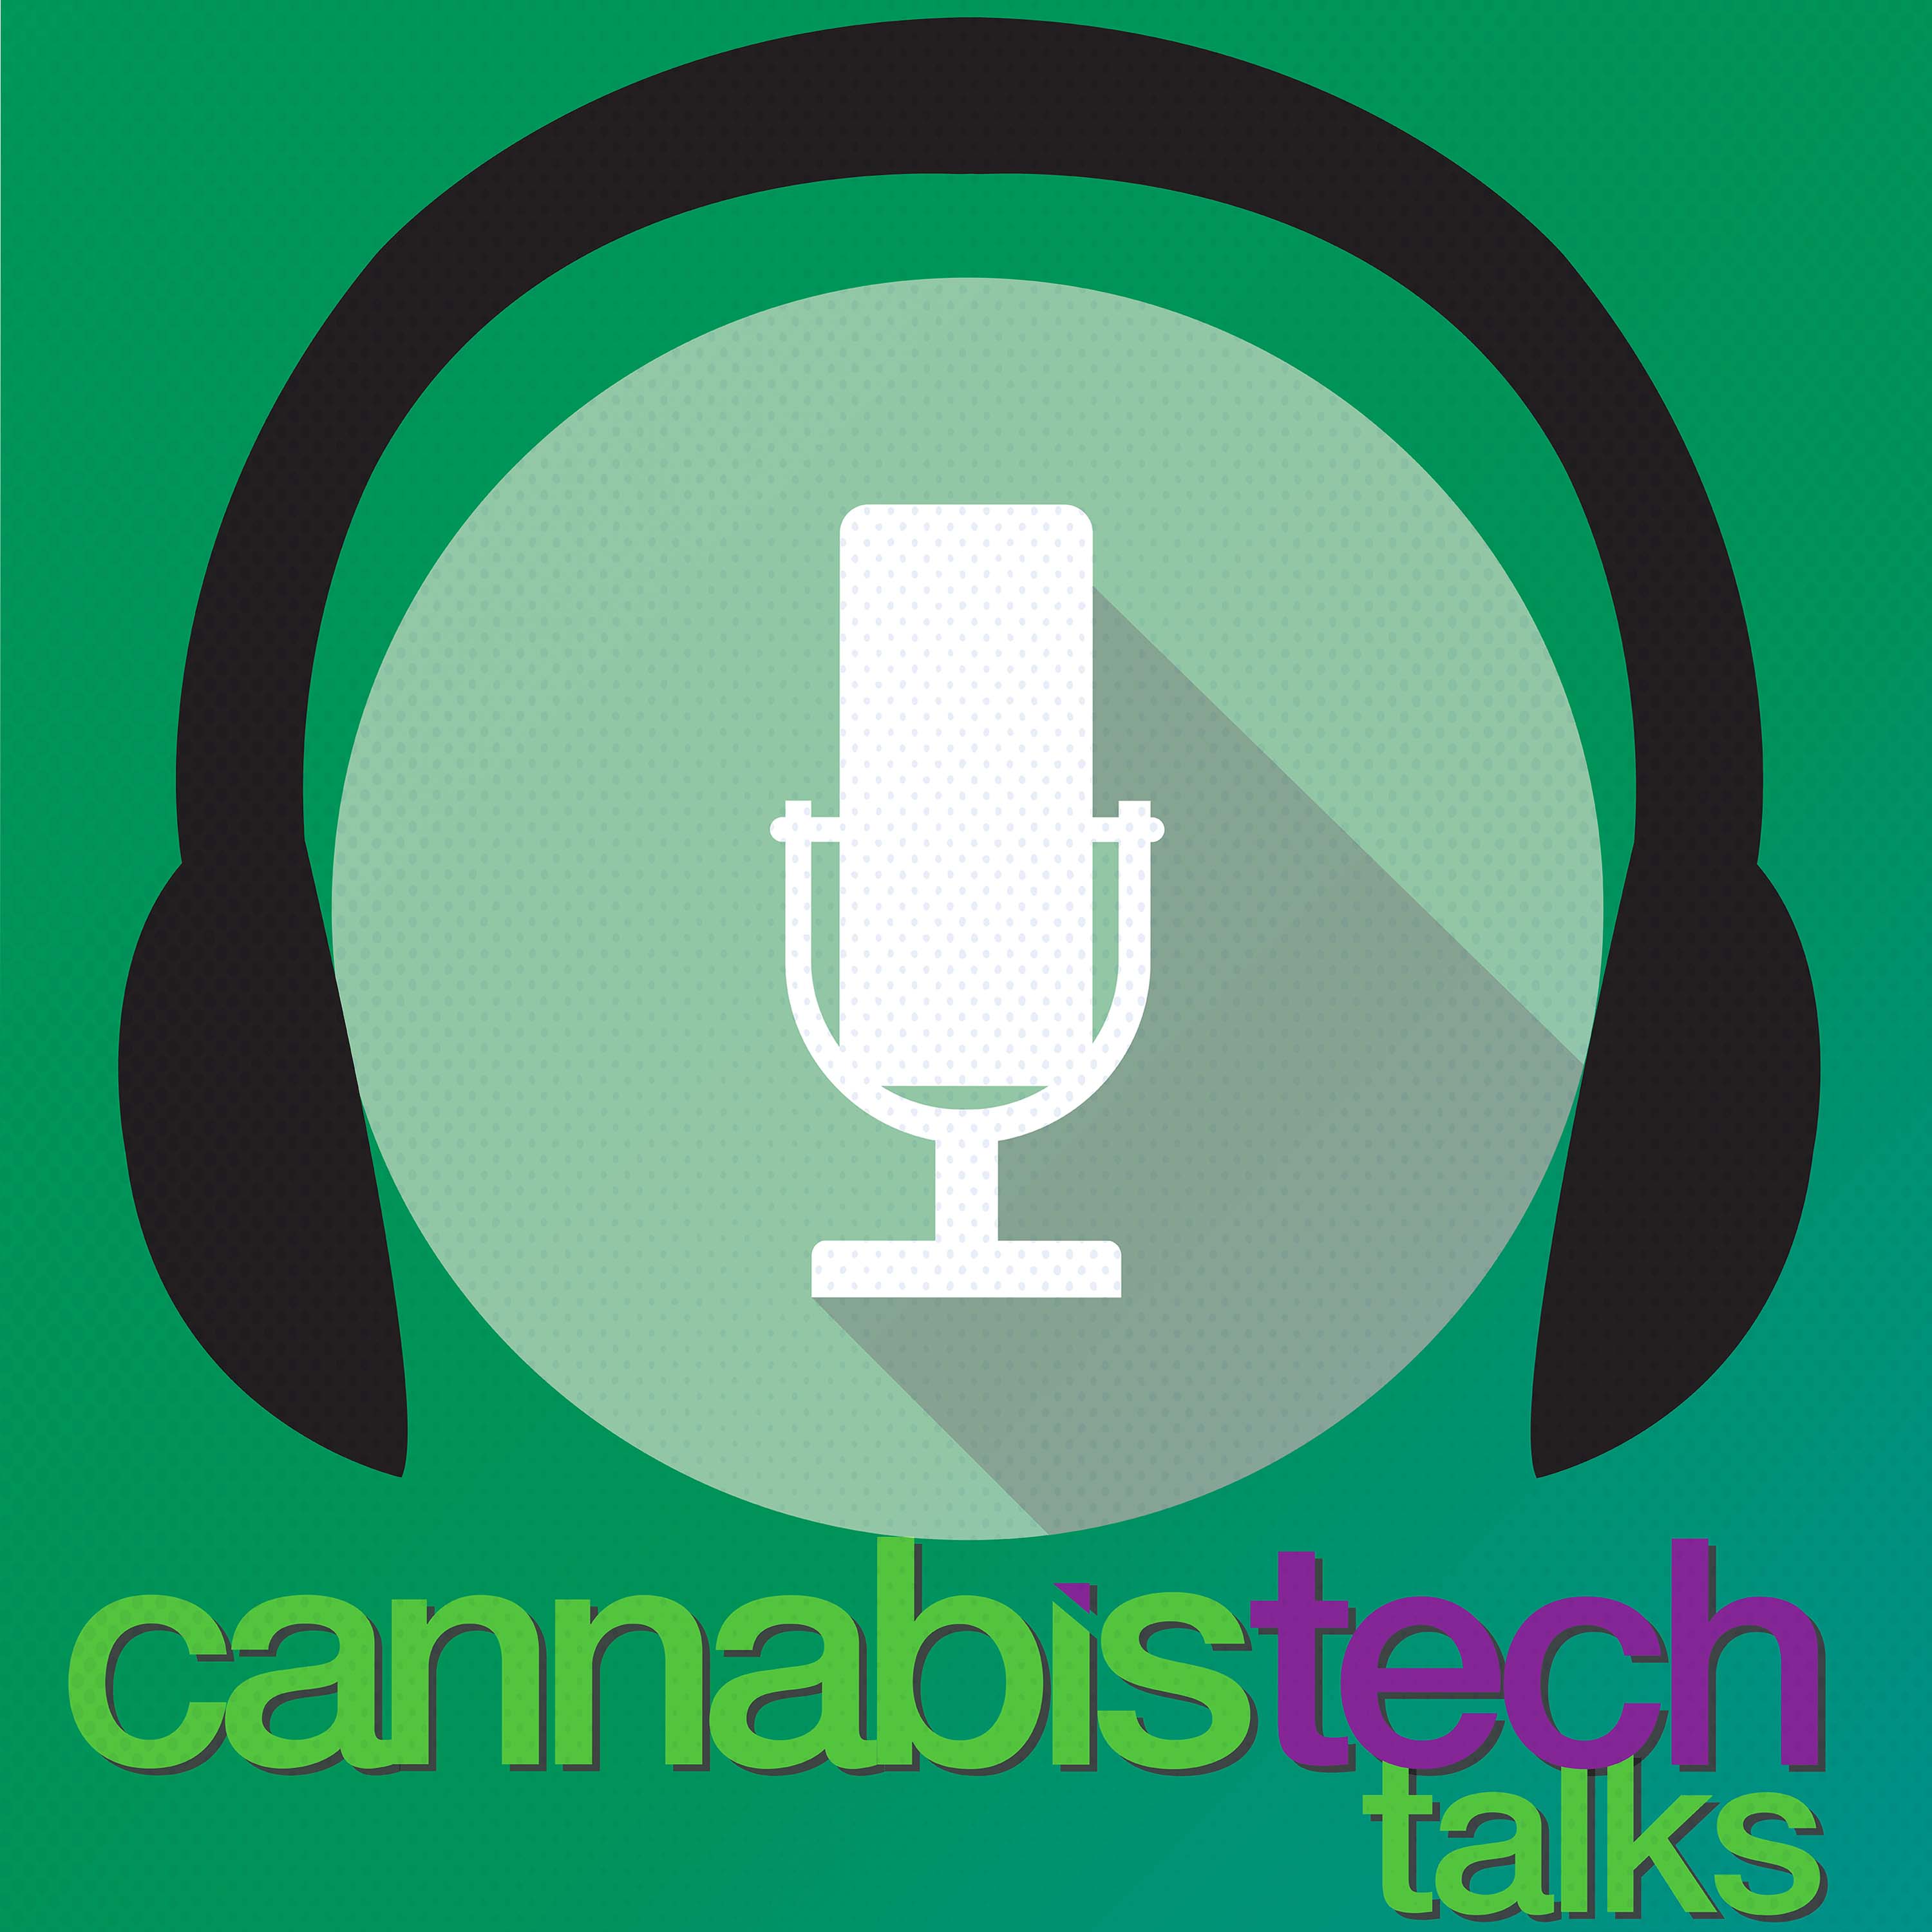 Episode 120: Cannabis Law With Sarah Lee Gossett Parrish